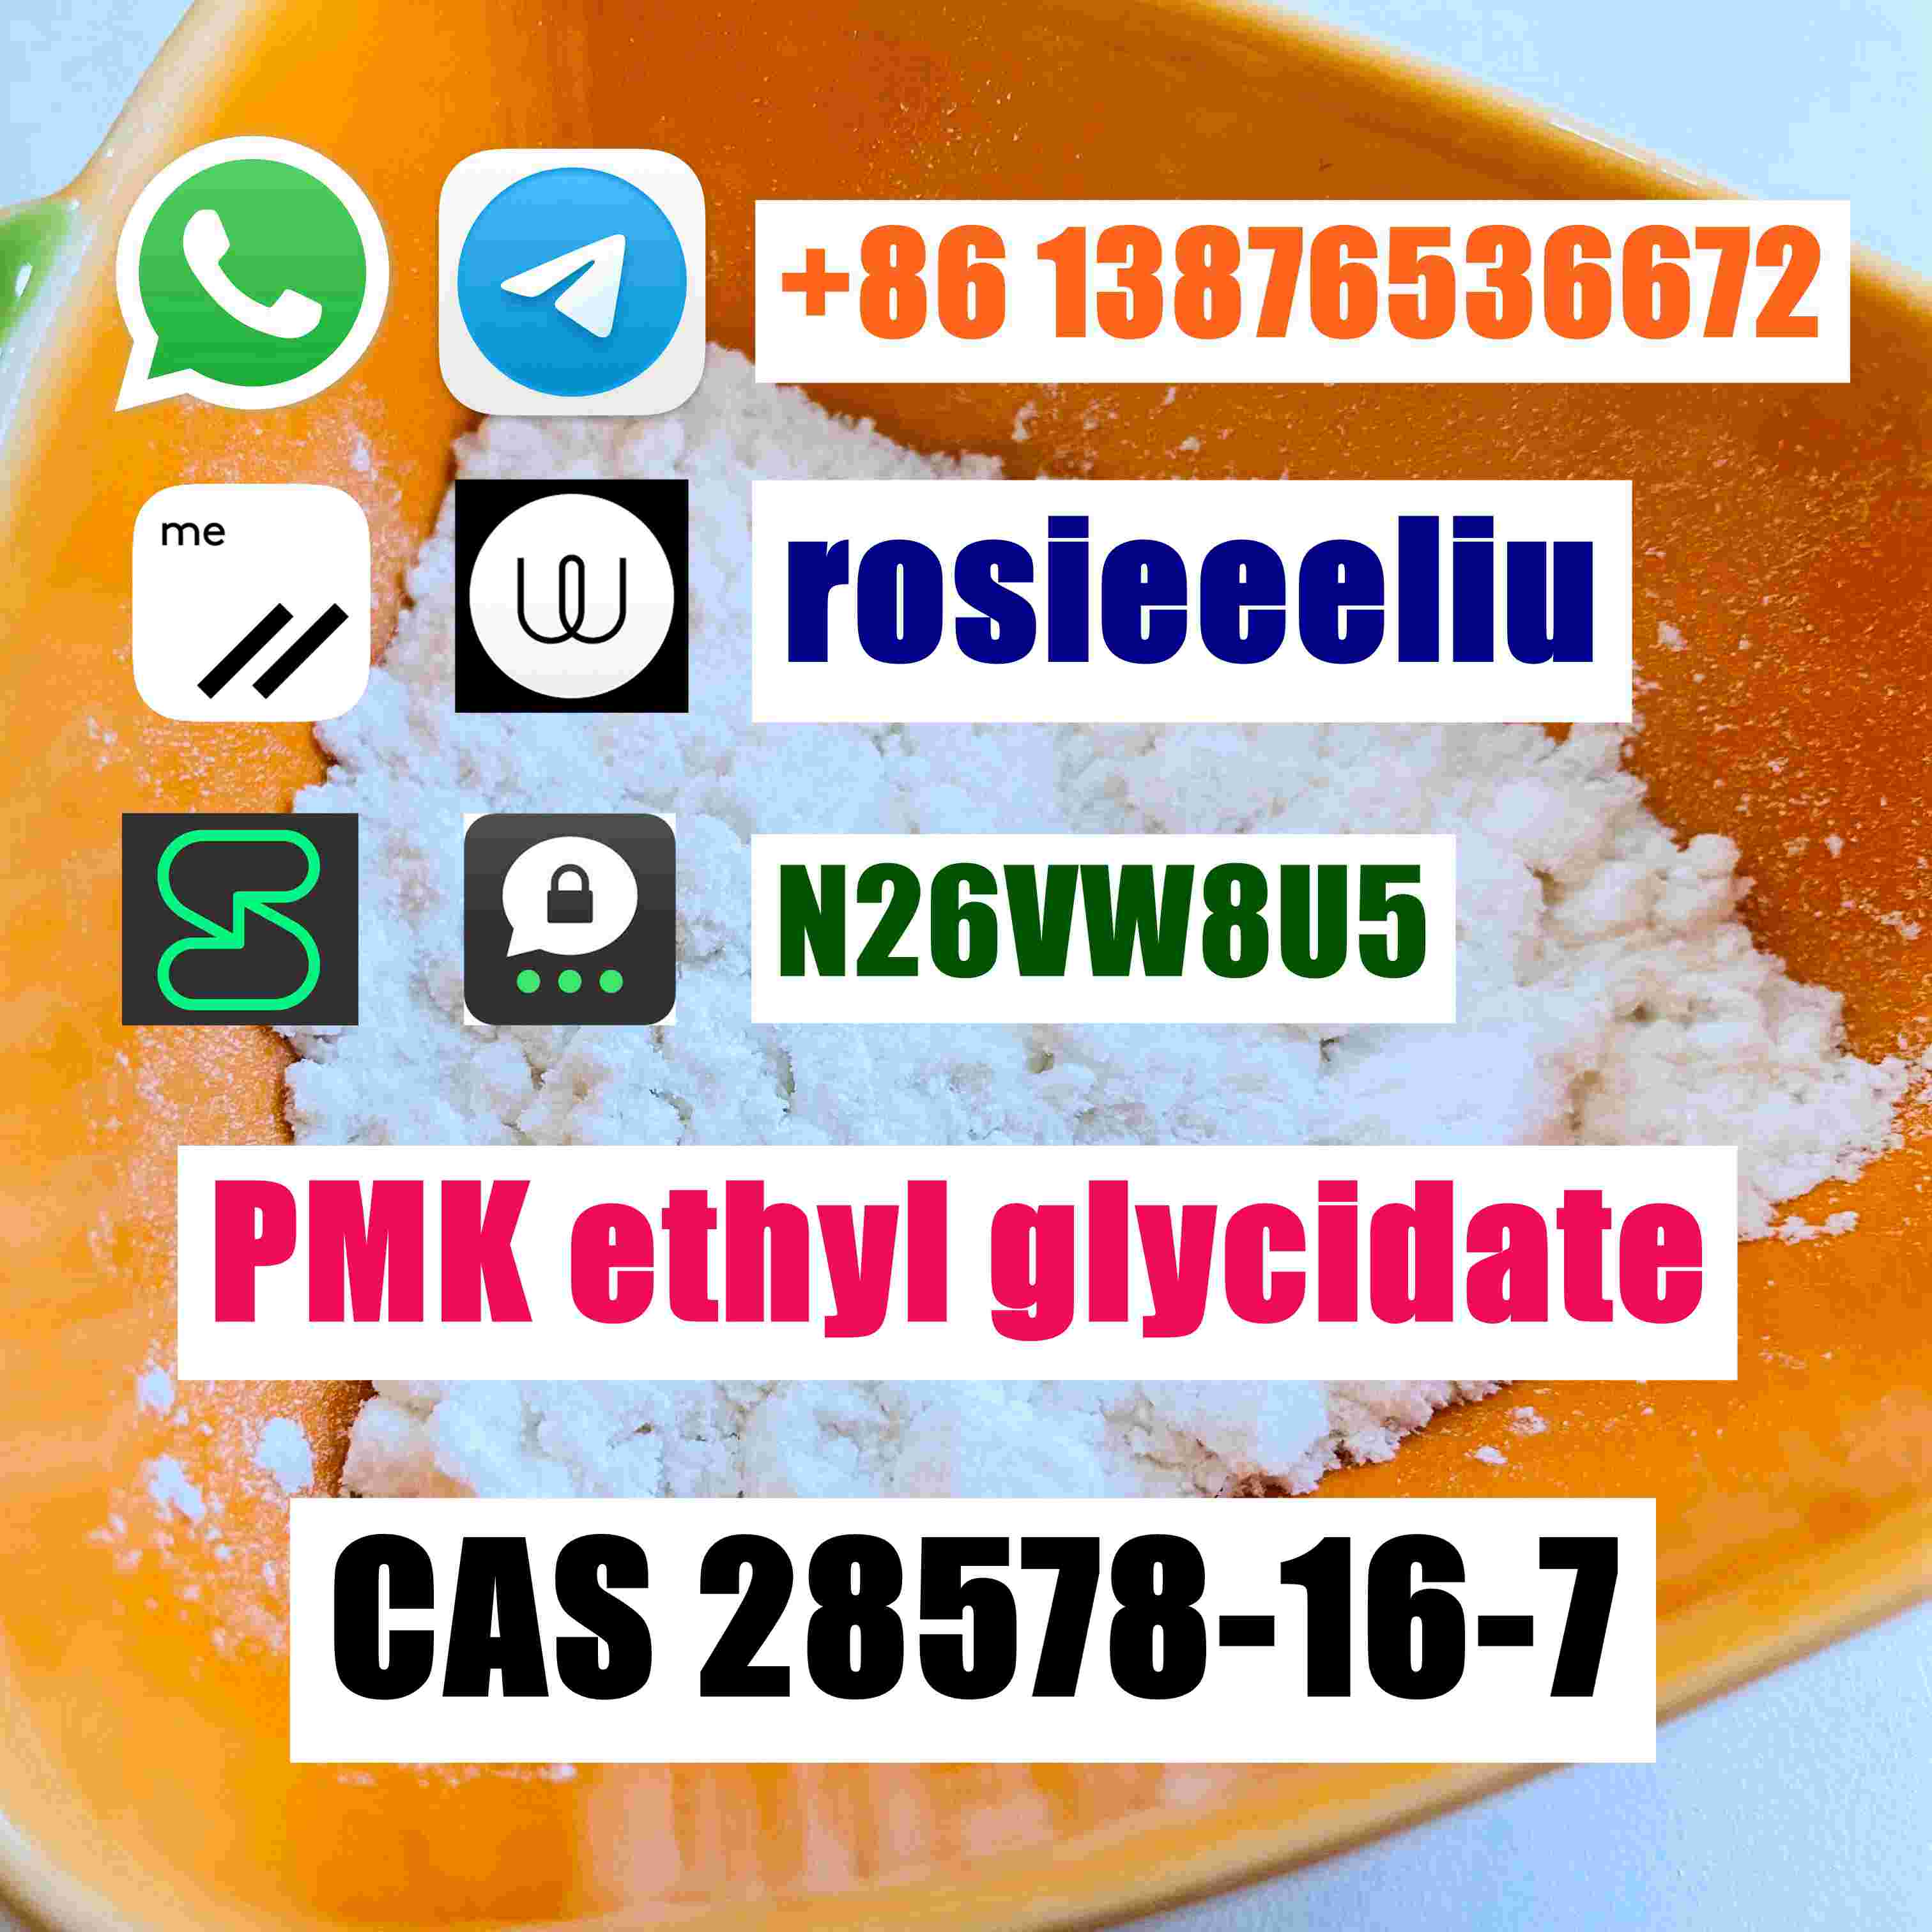 8613876536672-rosie@amarvelbio.com-28578-16-7-PMK ethyl glycidate-pmk oil-wickr .jpeg